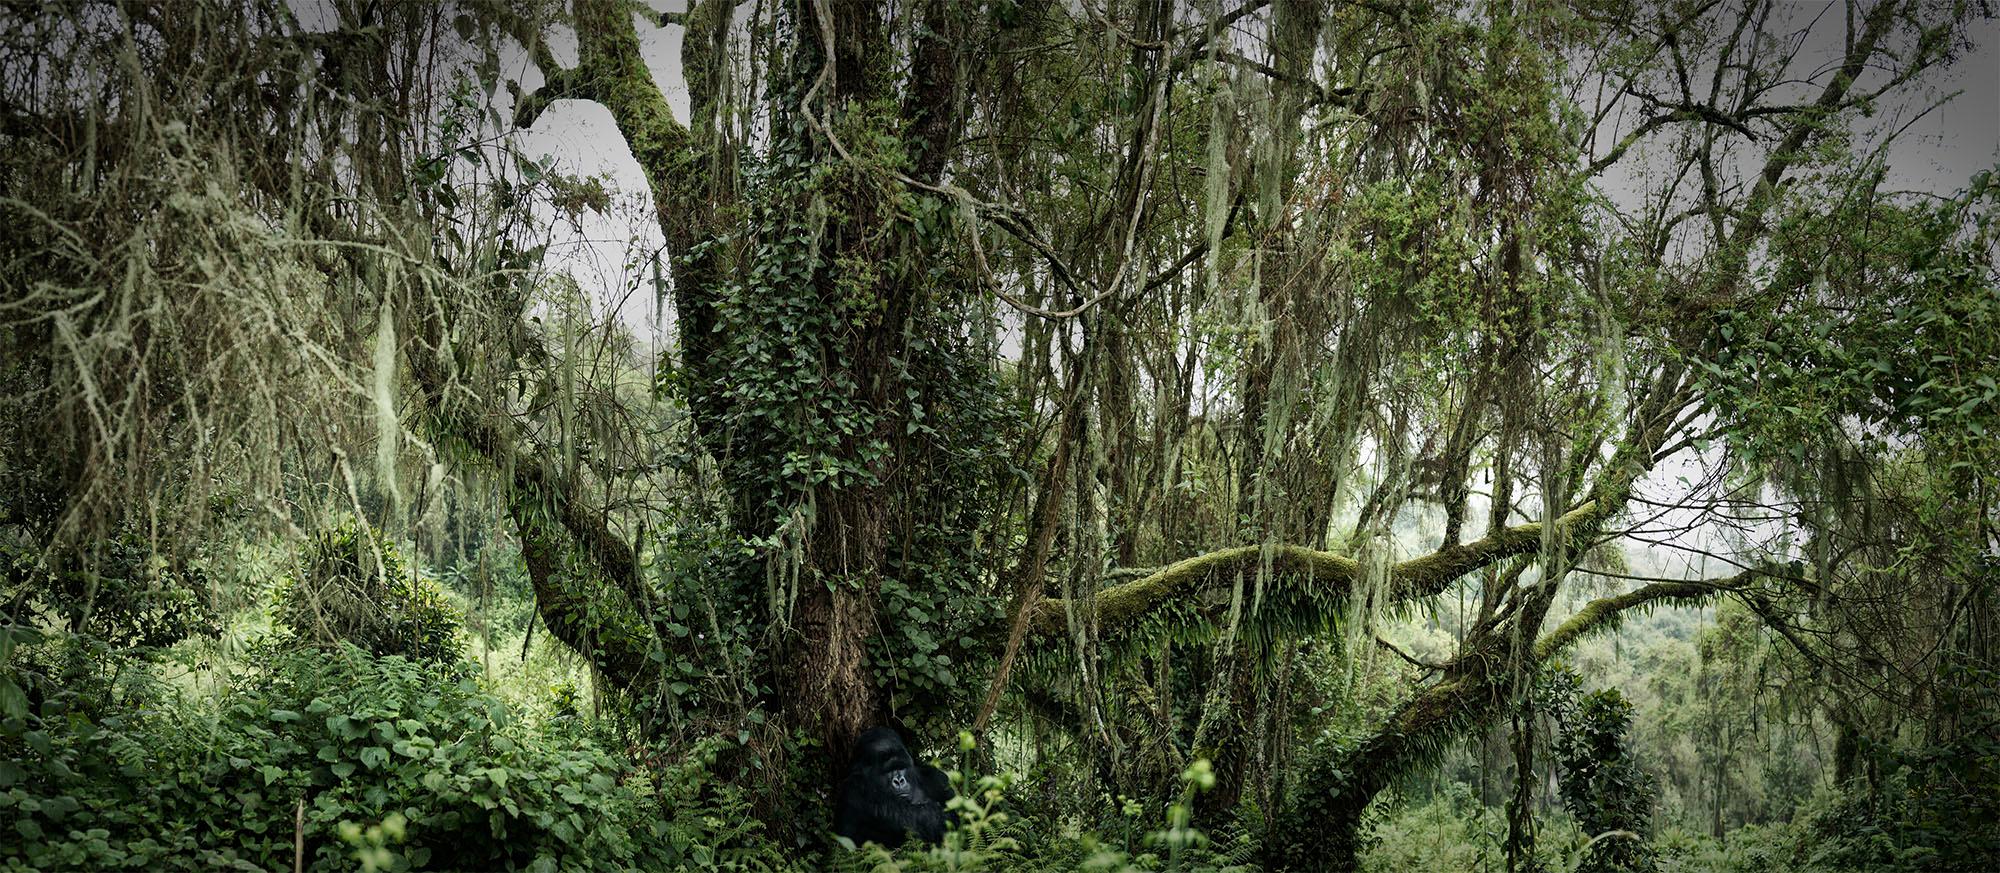 Joachim Schmeisser Landscape Photograph - Lost Paradise, animal, wildlife, color photography, green, gorilla, africa